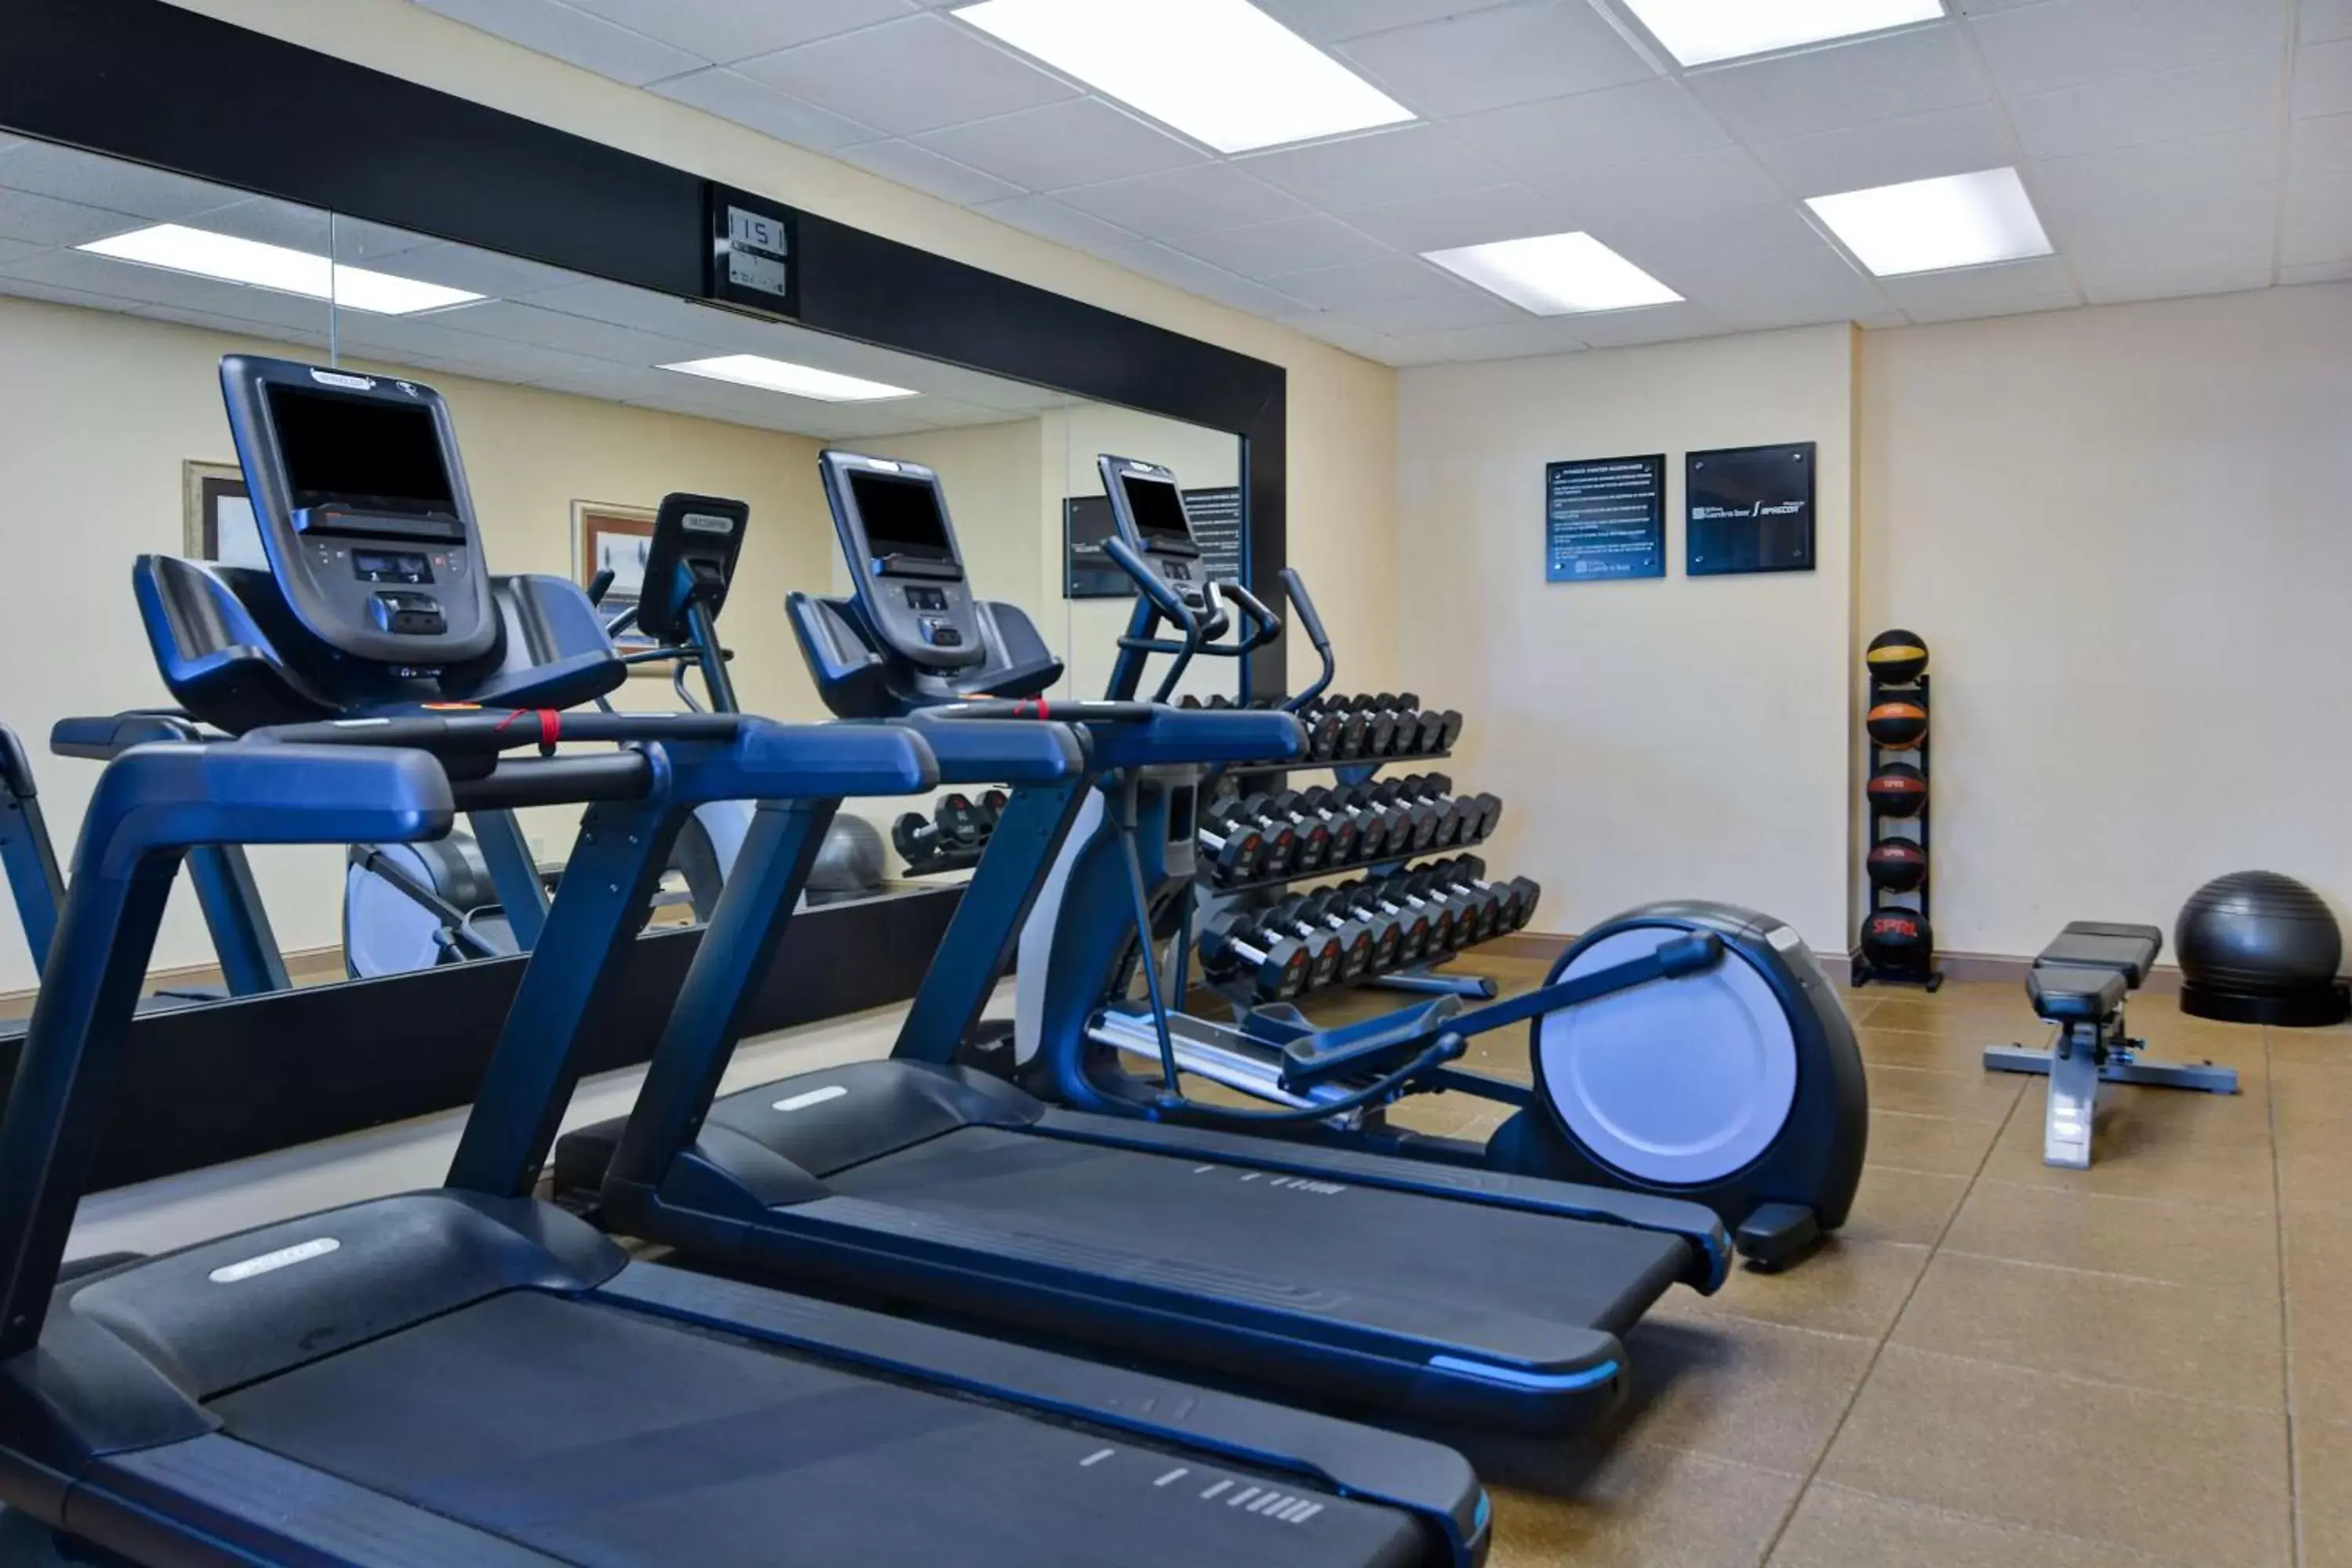 Fitness centre/facilities, Fitness Center/Facilities in Hilton Garden Inn Jacksonville Orange Park